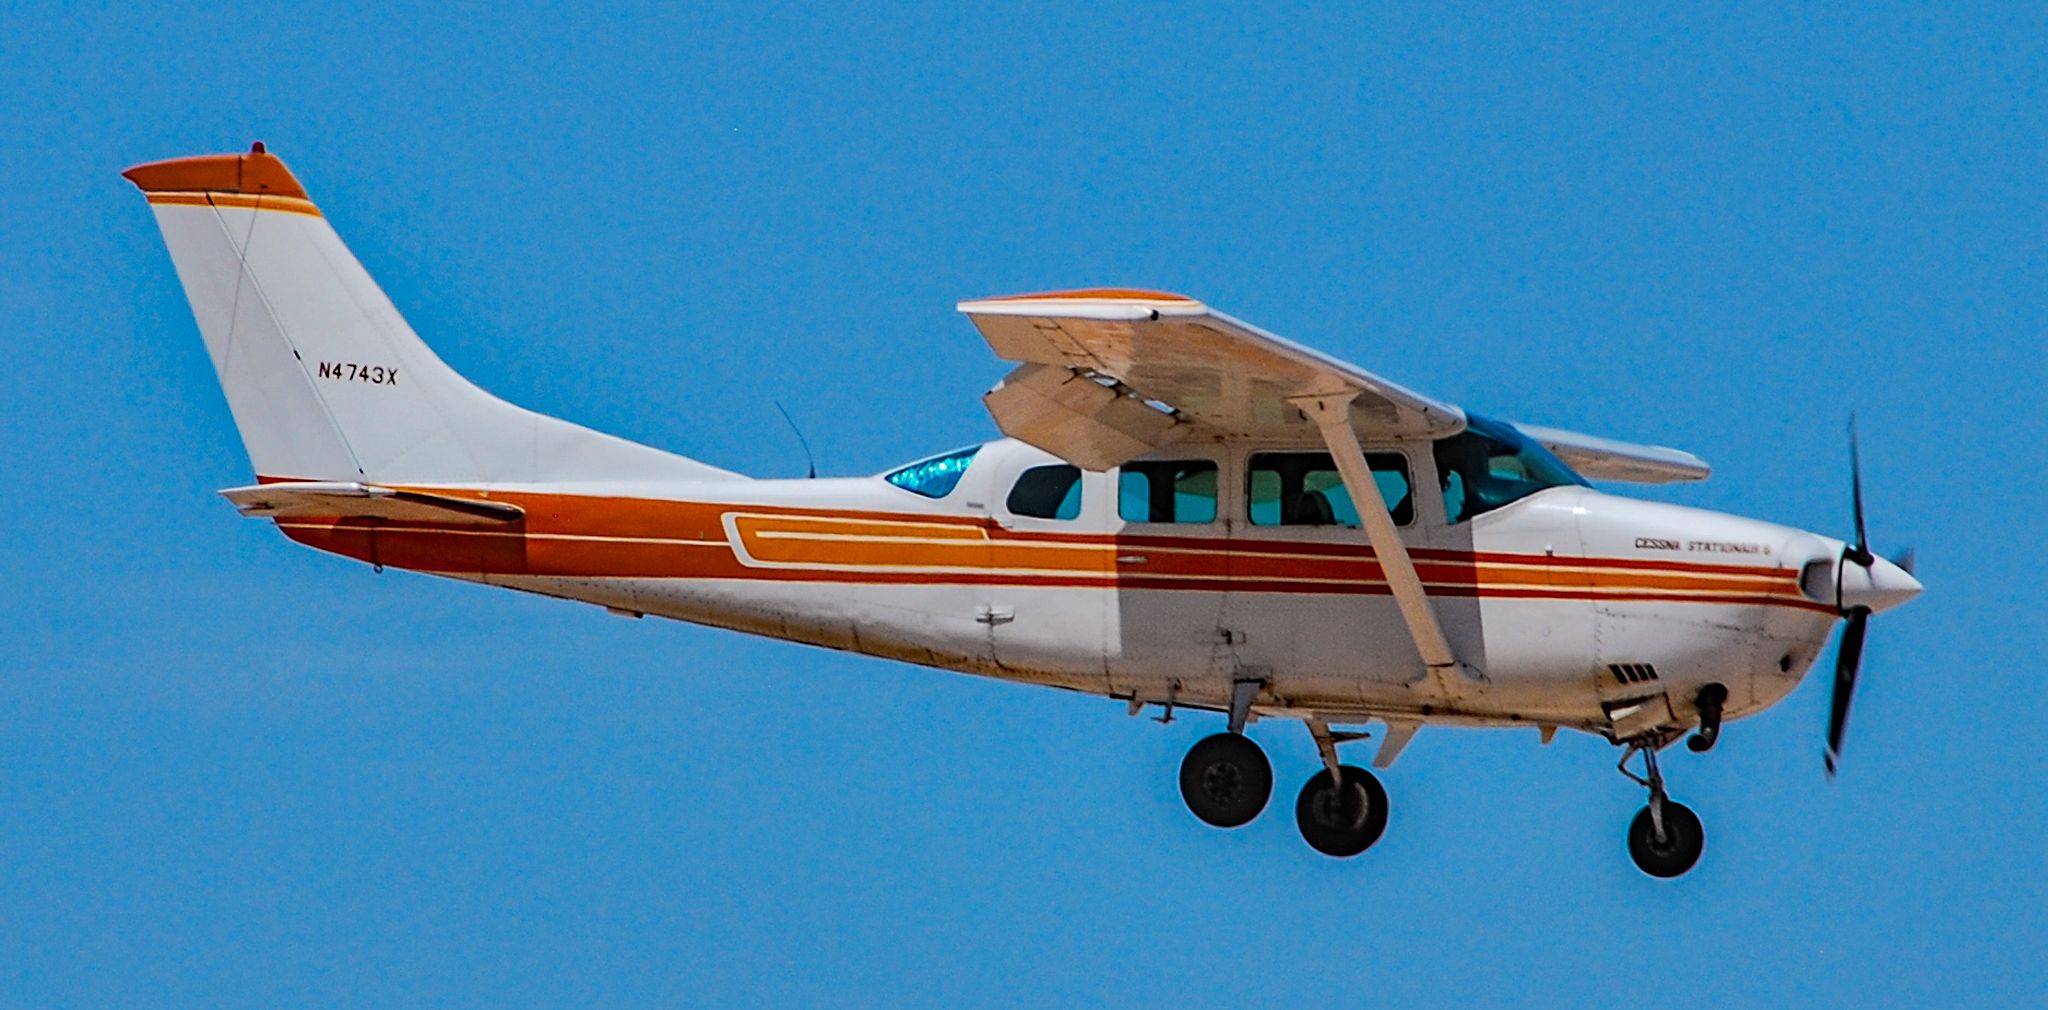 Cessna T206 Turbo Stationair (N4743X) - N4743X 1980 Cessna TU206G Turbo Stationair s/n U20605530 - North Las Vegas Airport (IATA: VGT, ICAO: KVGT, FAA LID: VGT)br /Photo: Tomas Del Corobr /June 26, 2020